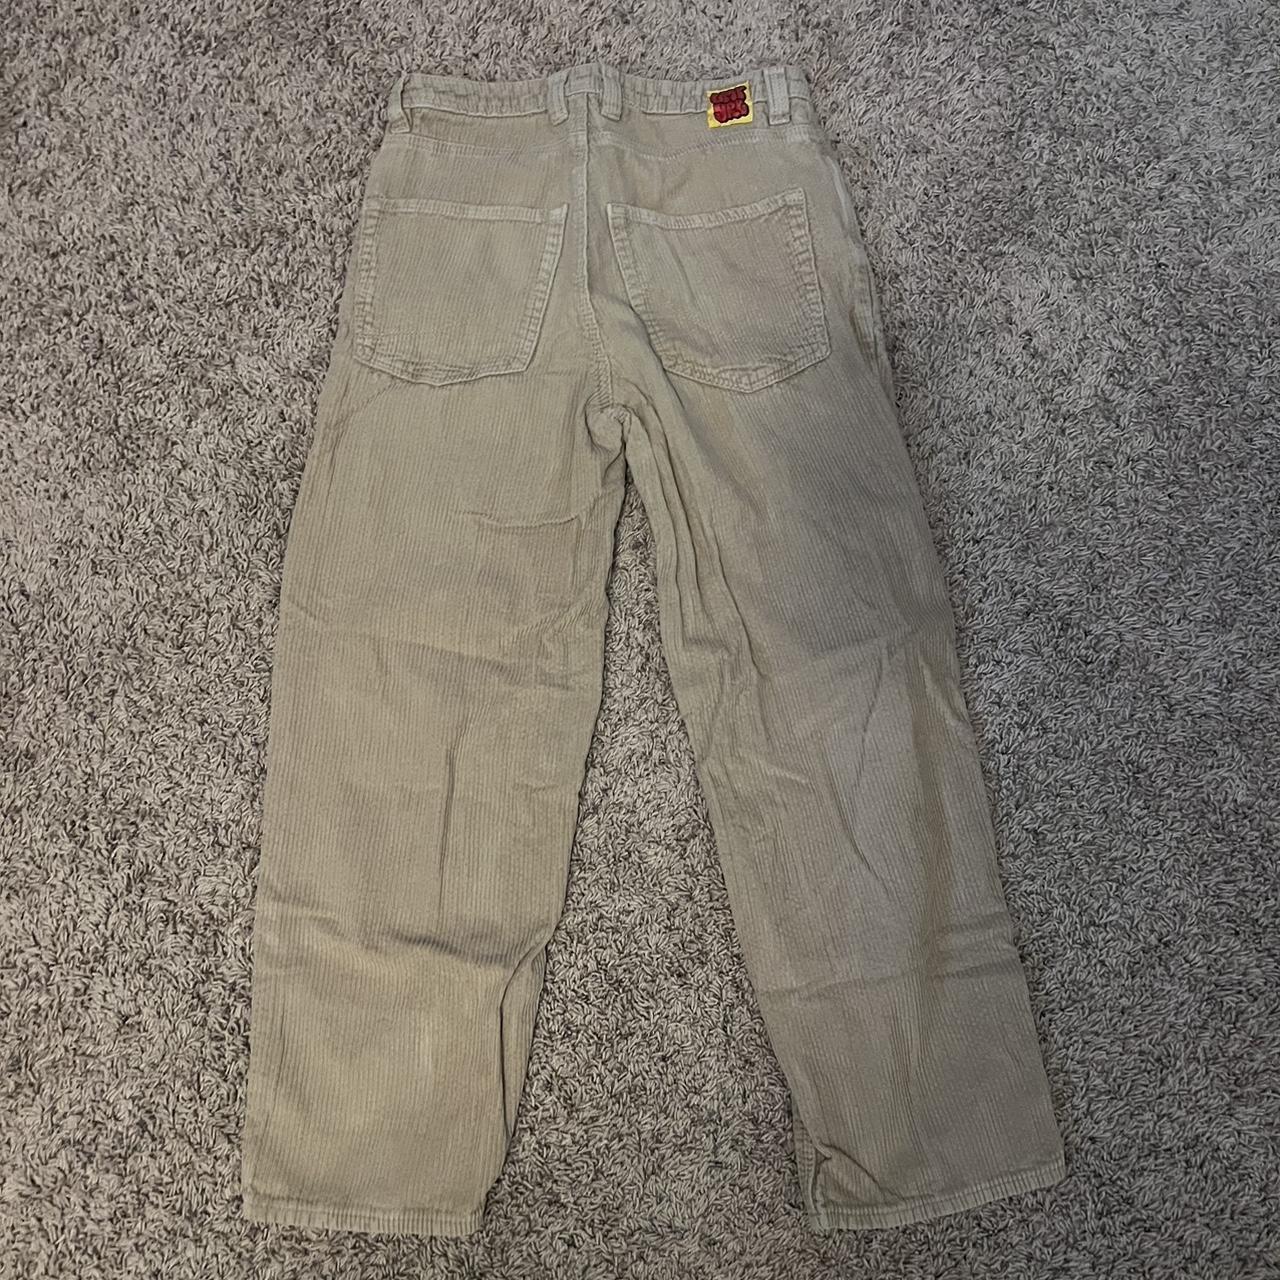 Empyre beige corduroy jeans, size 28 - Depop